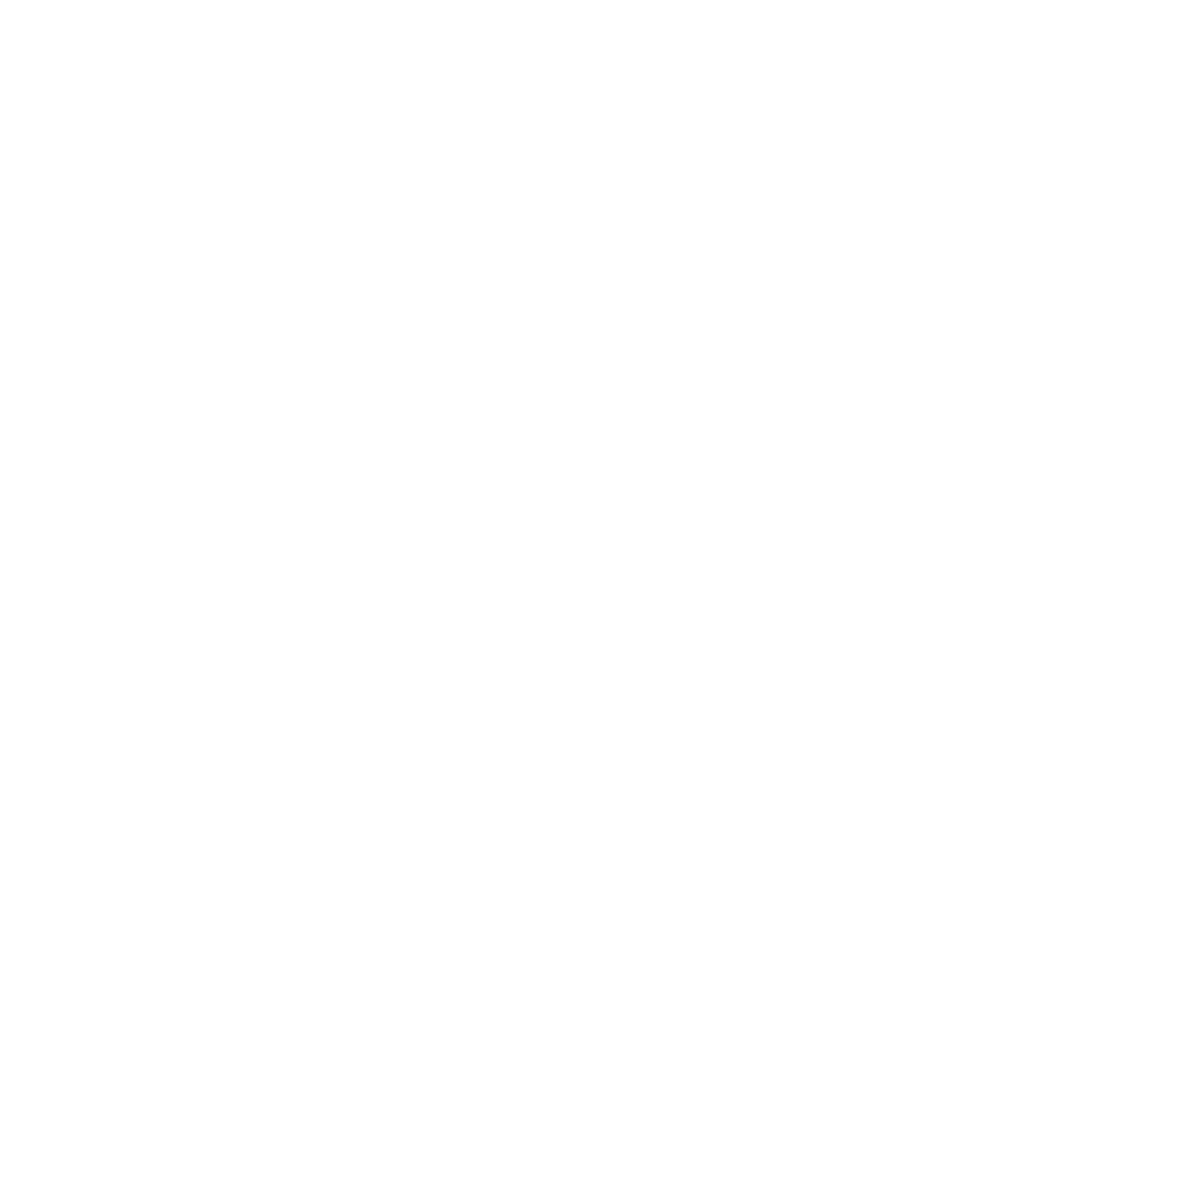 OzAsia Real Estate